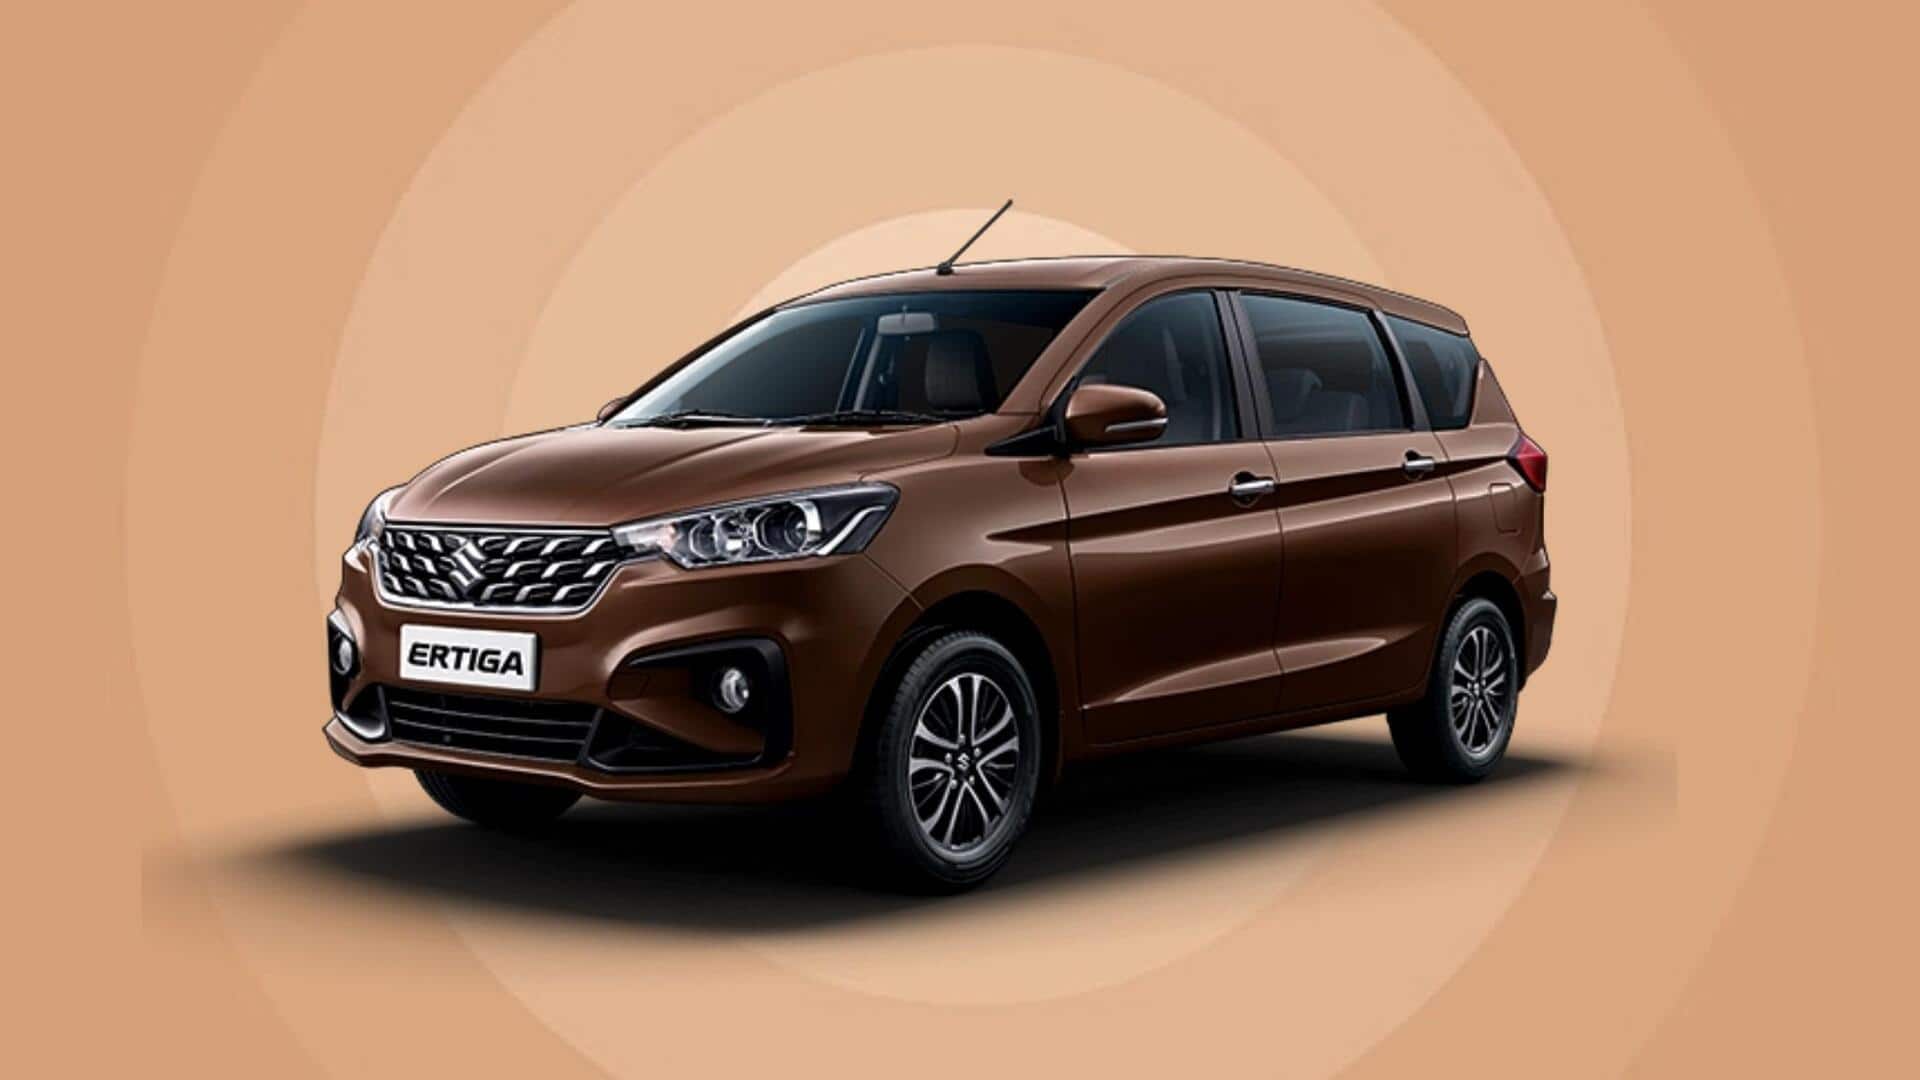 Maruti Suzuki Ertiga achieves 10 lakh sales milestone in India